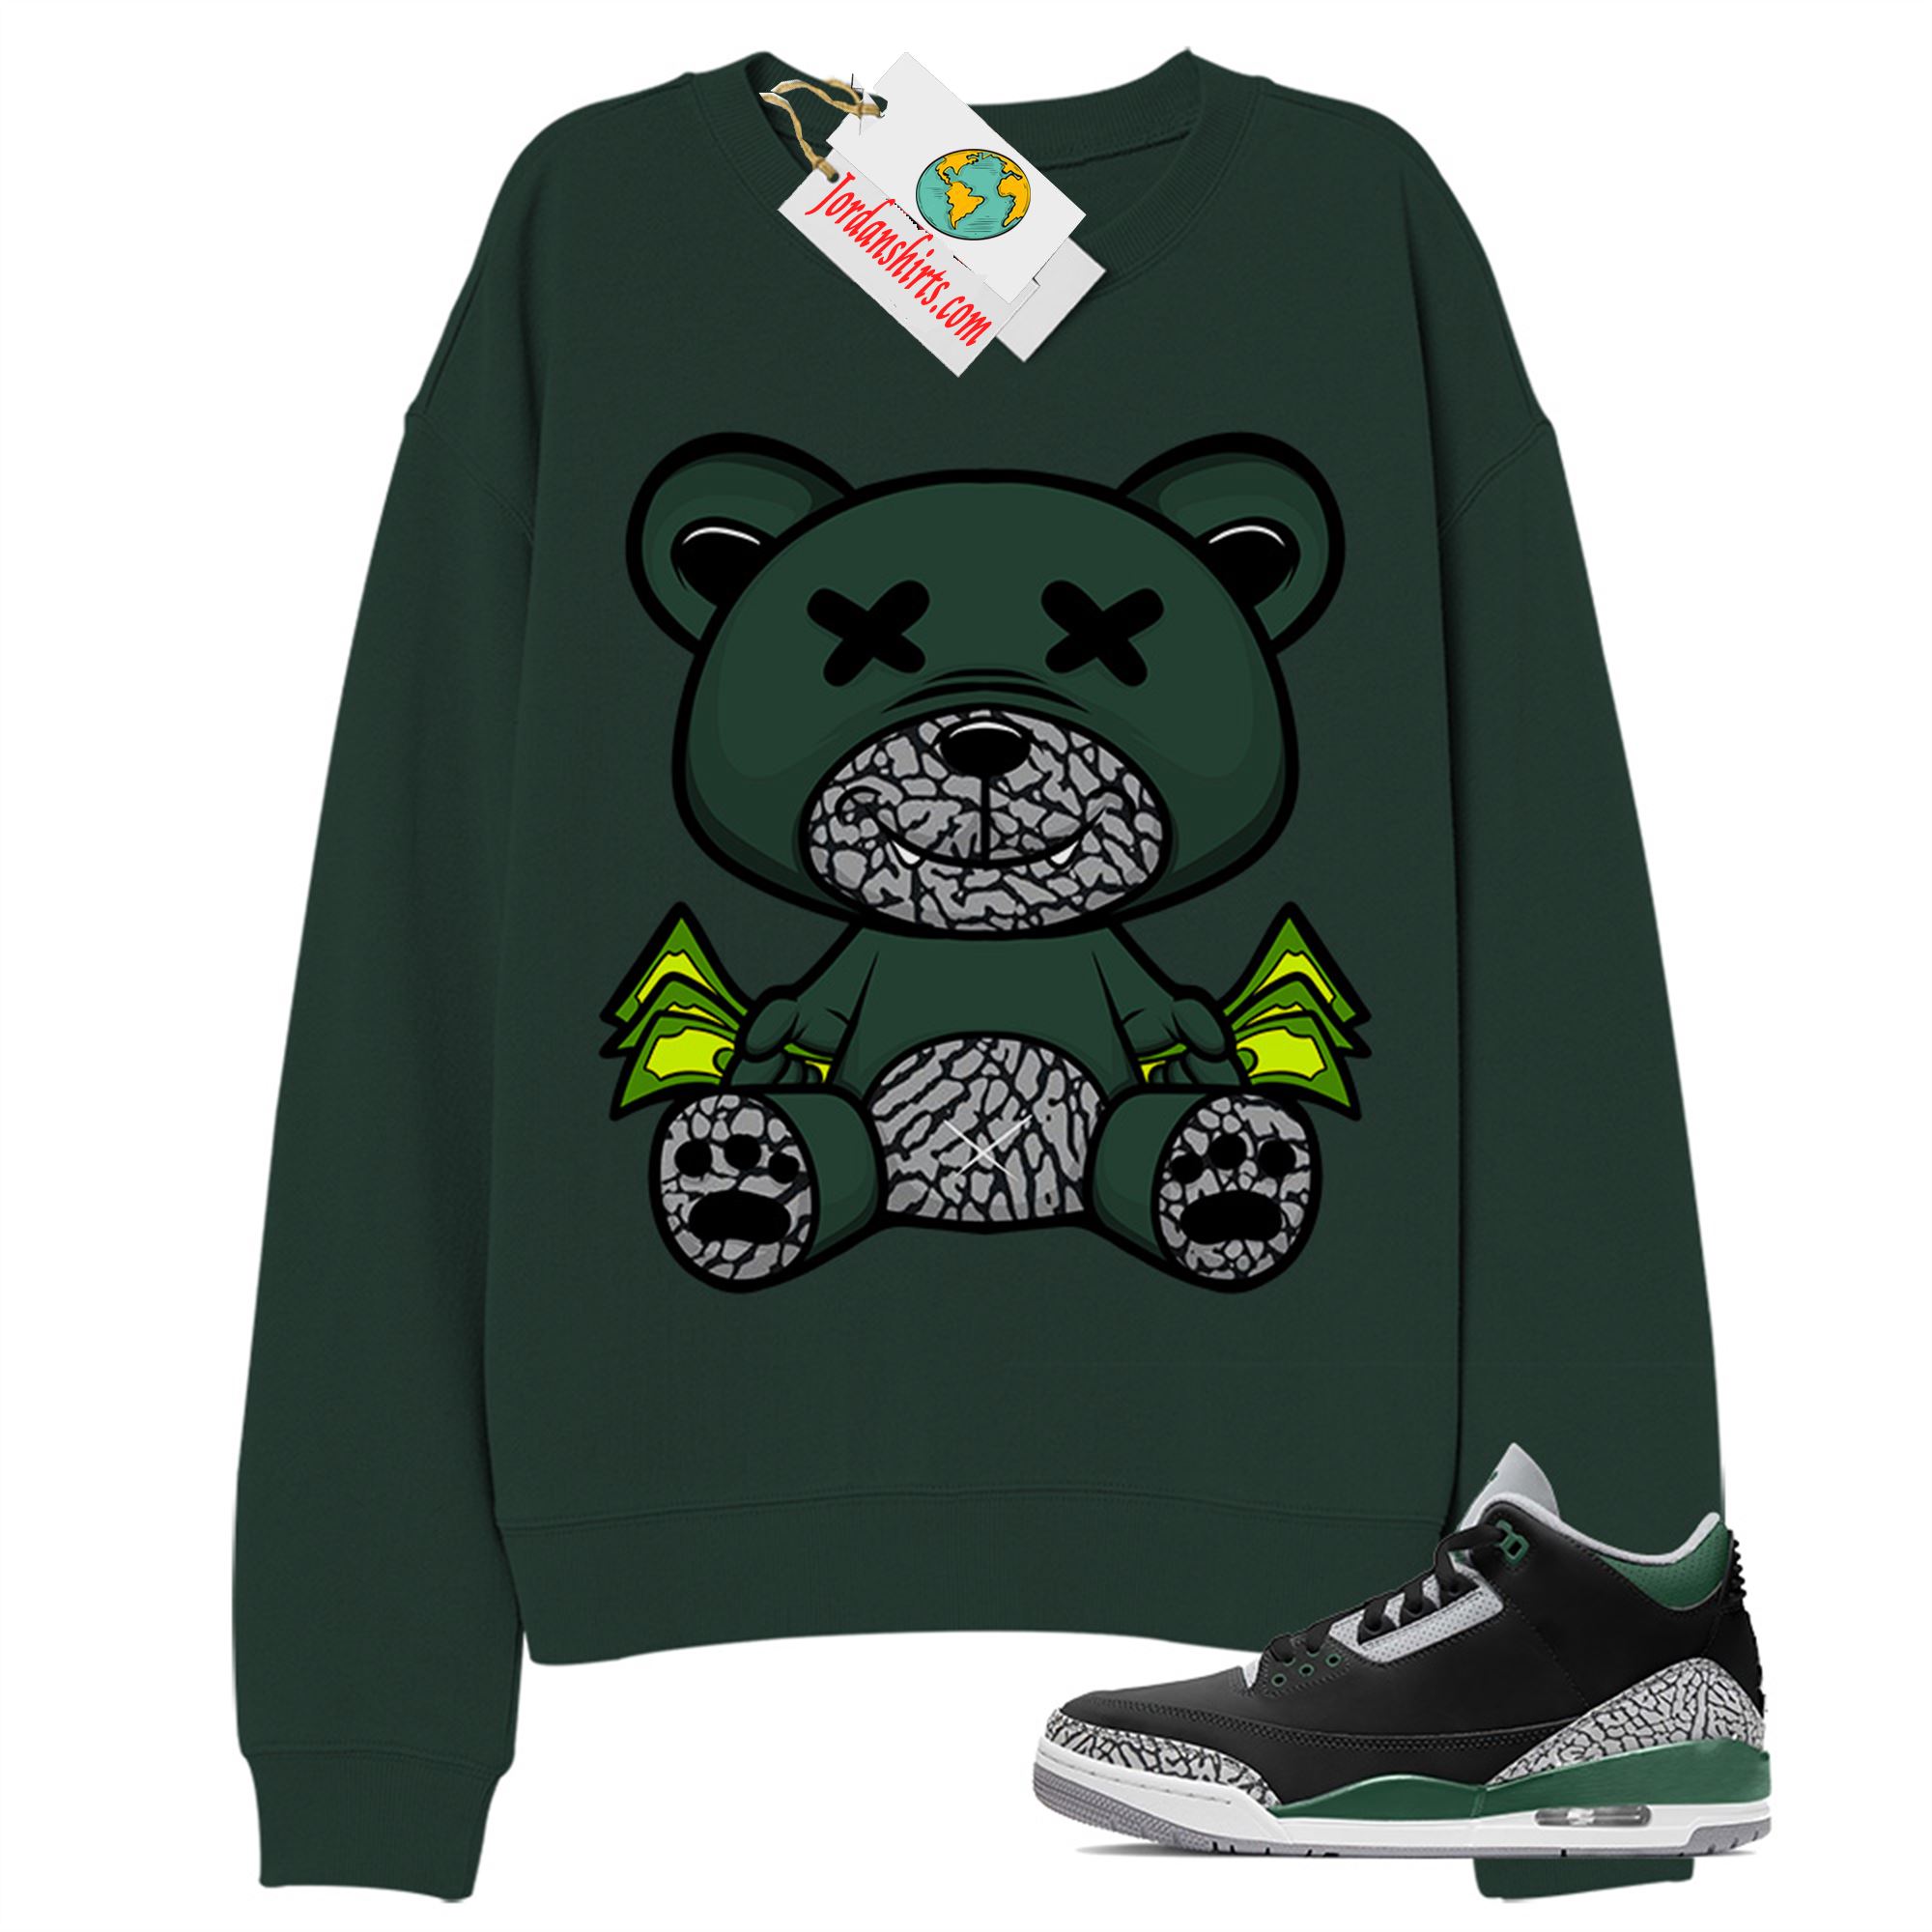 Jordan 3 Sweatshirt, Rich Teddy Bear Green Sweatshirt Air Jordan 3 Pine Green 3s Full Size Up To 5xl